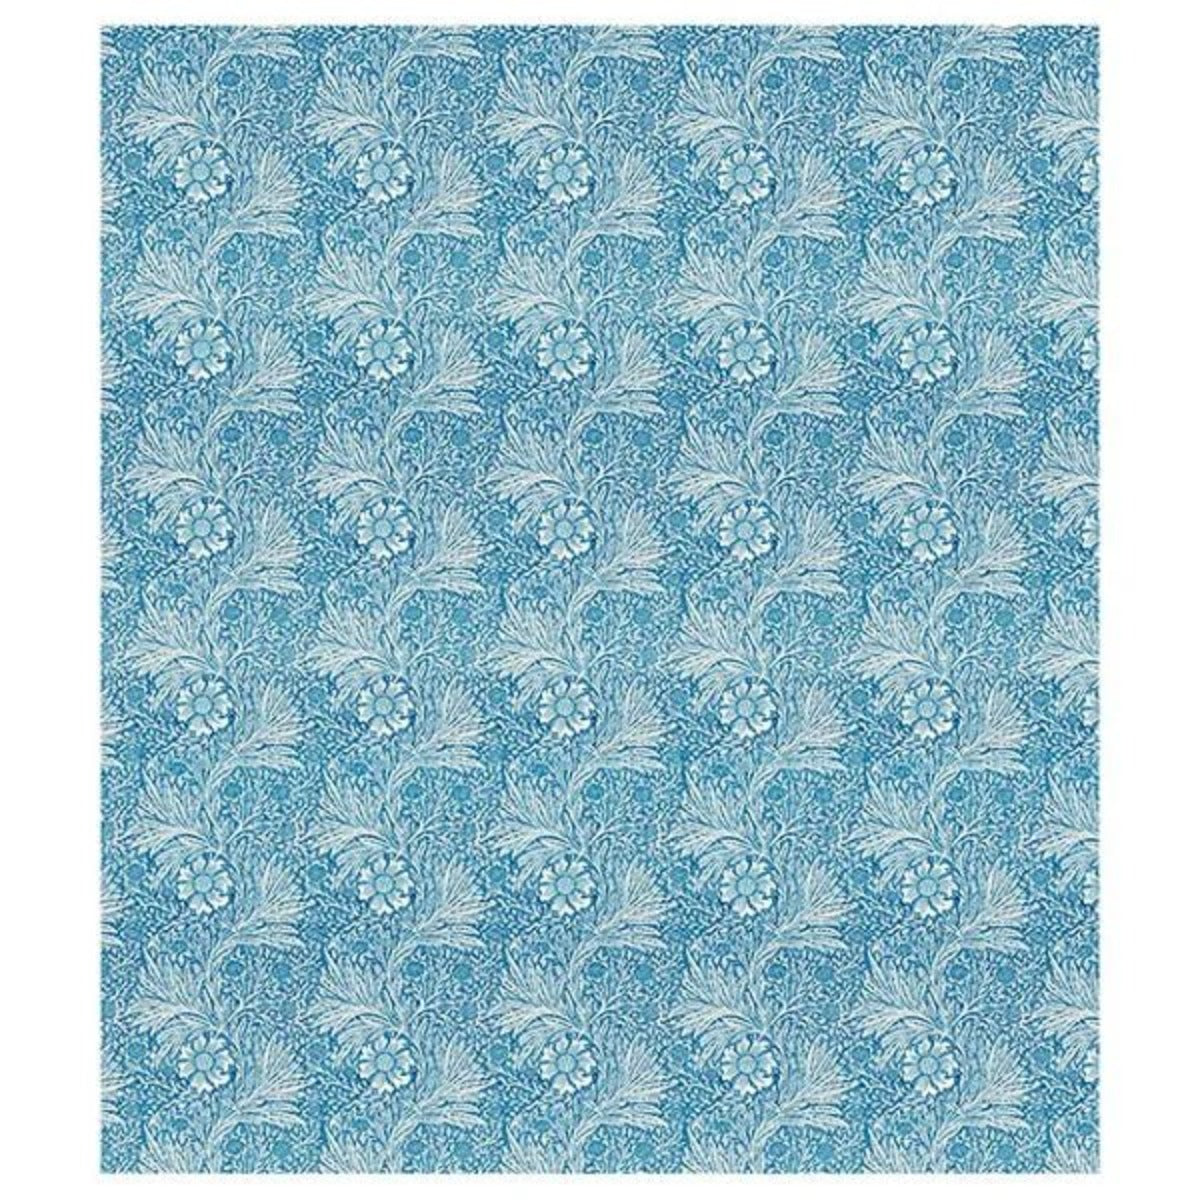 Nawrap Dish Cloth - William Morris, Marigold Blue